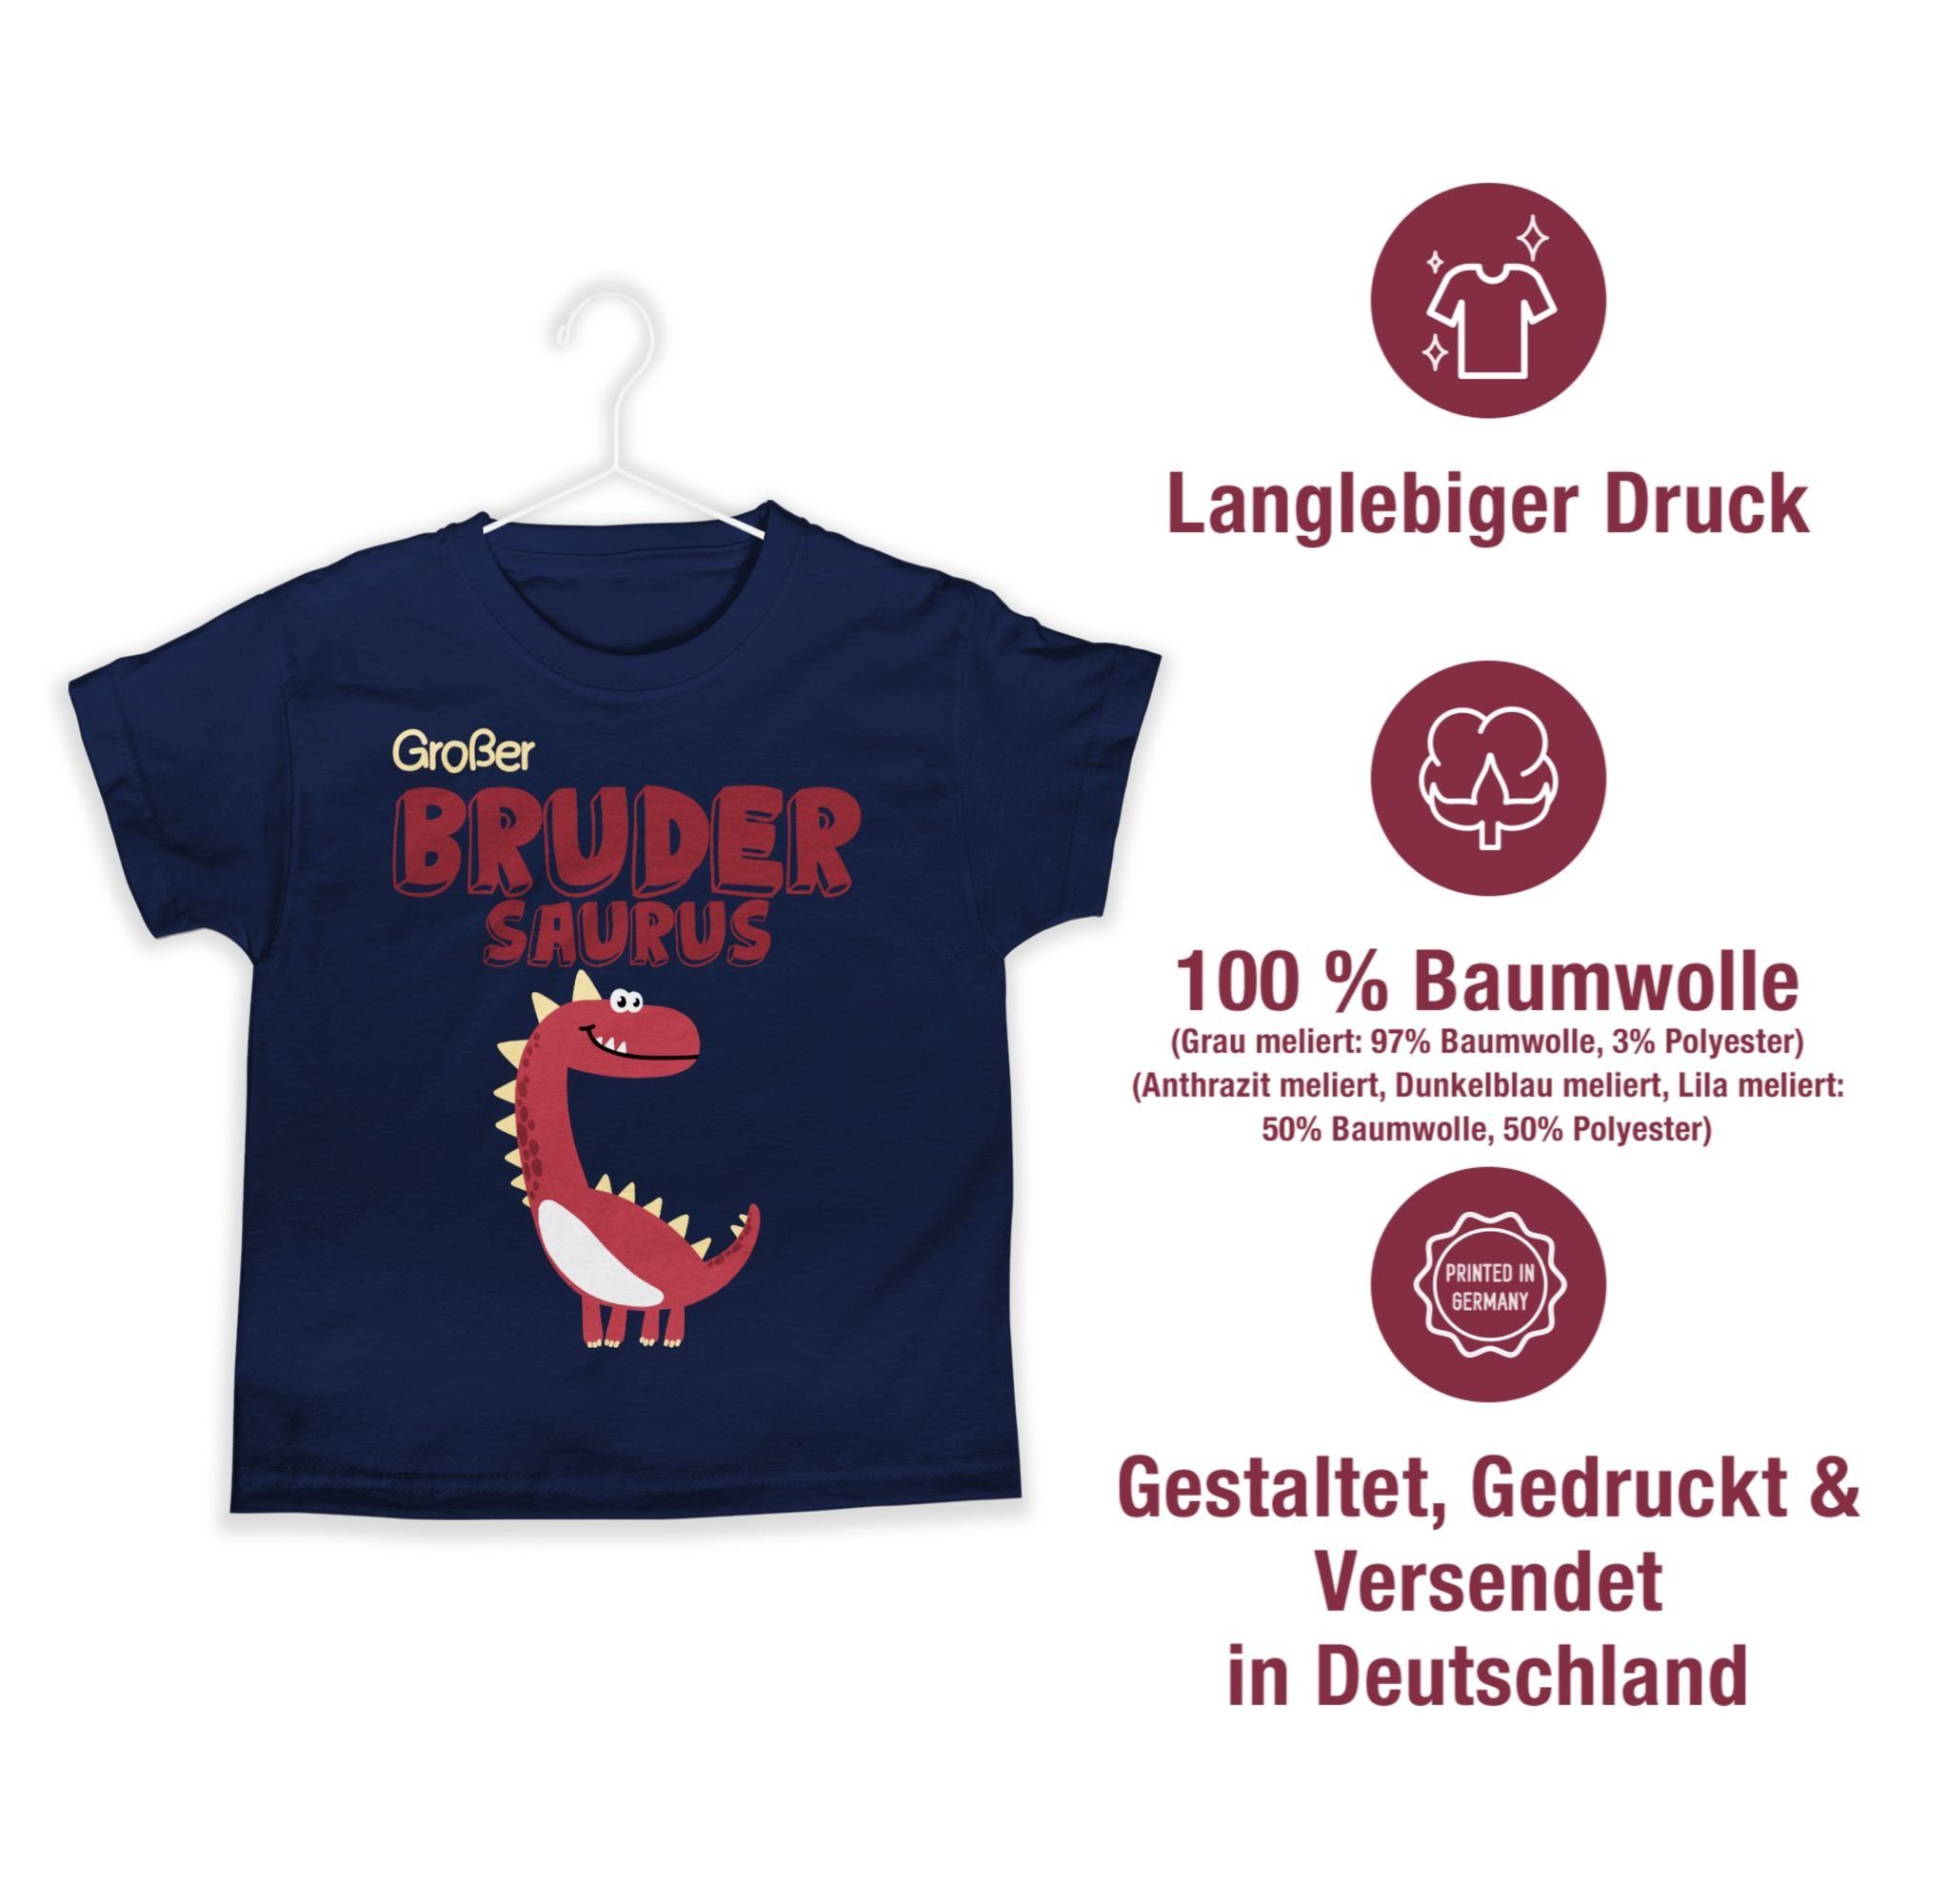 01 Bruder Dunkelblau Großer Großer T-Shirt Brudersaurus Shirtracer